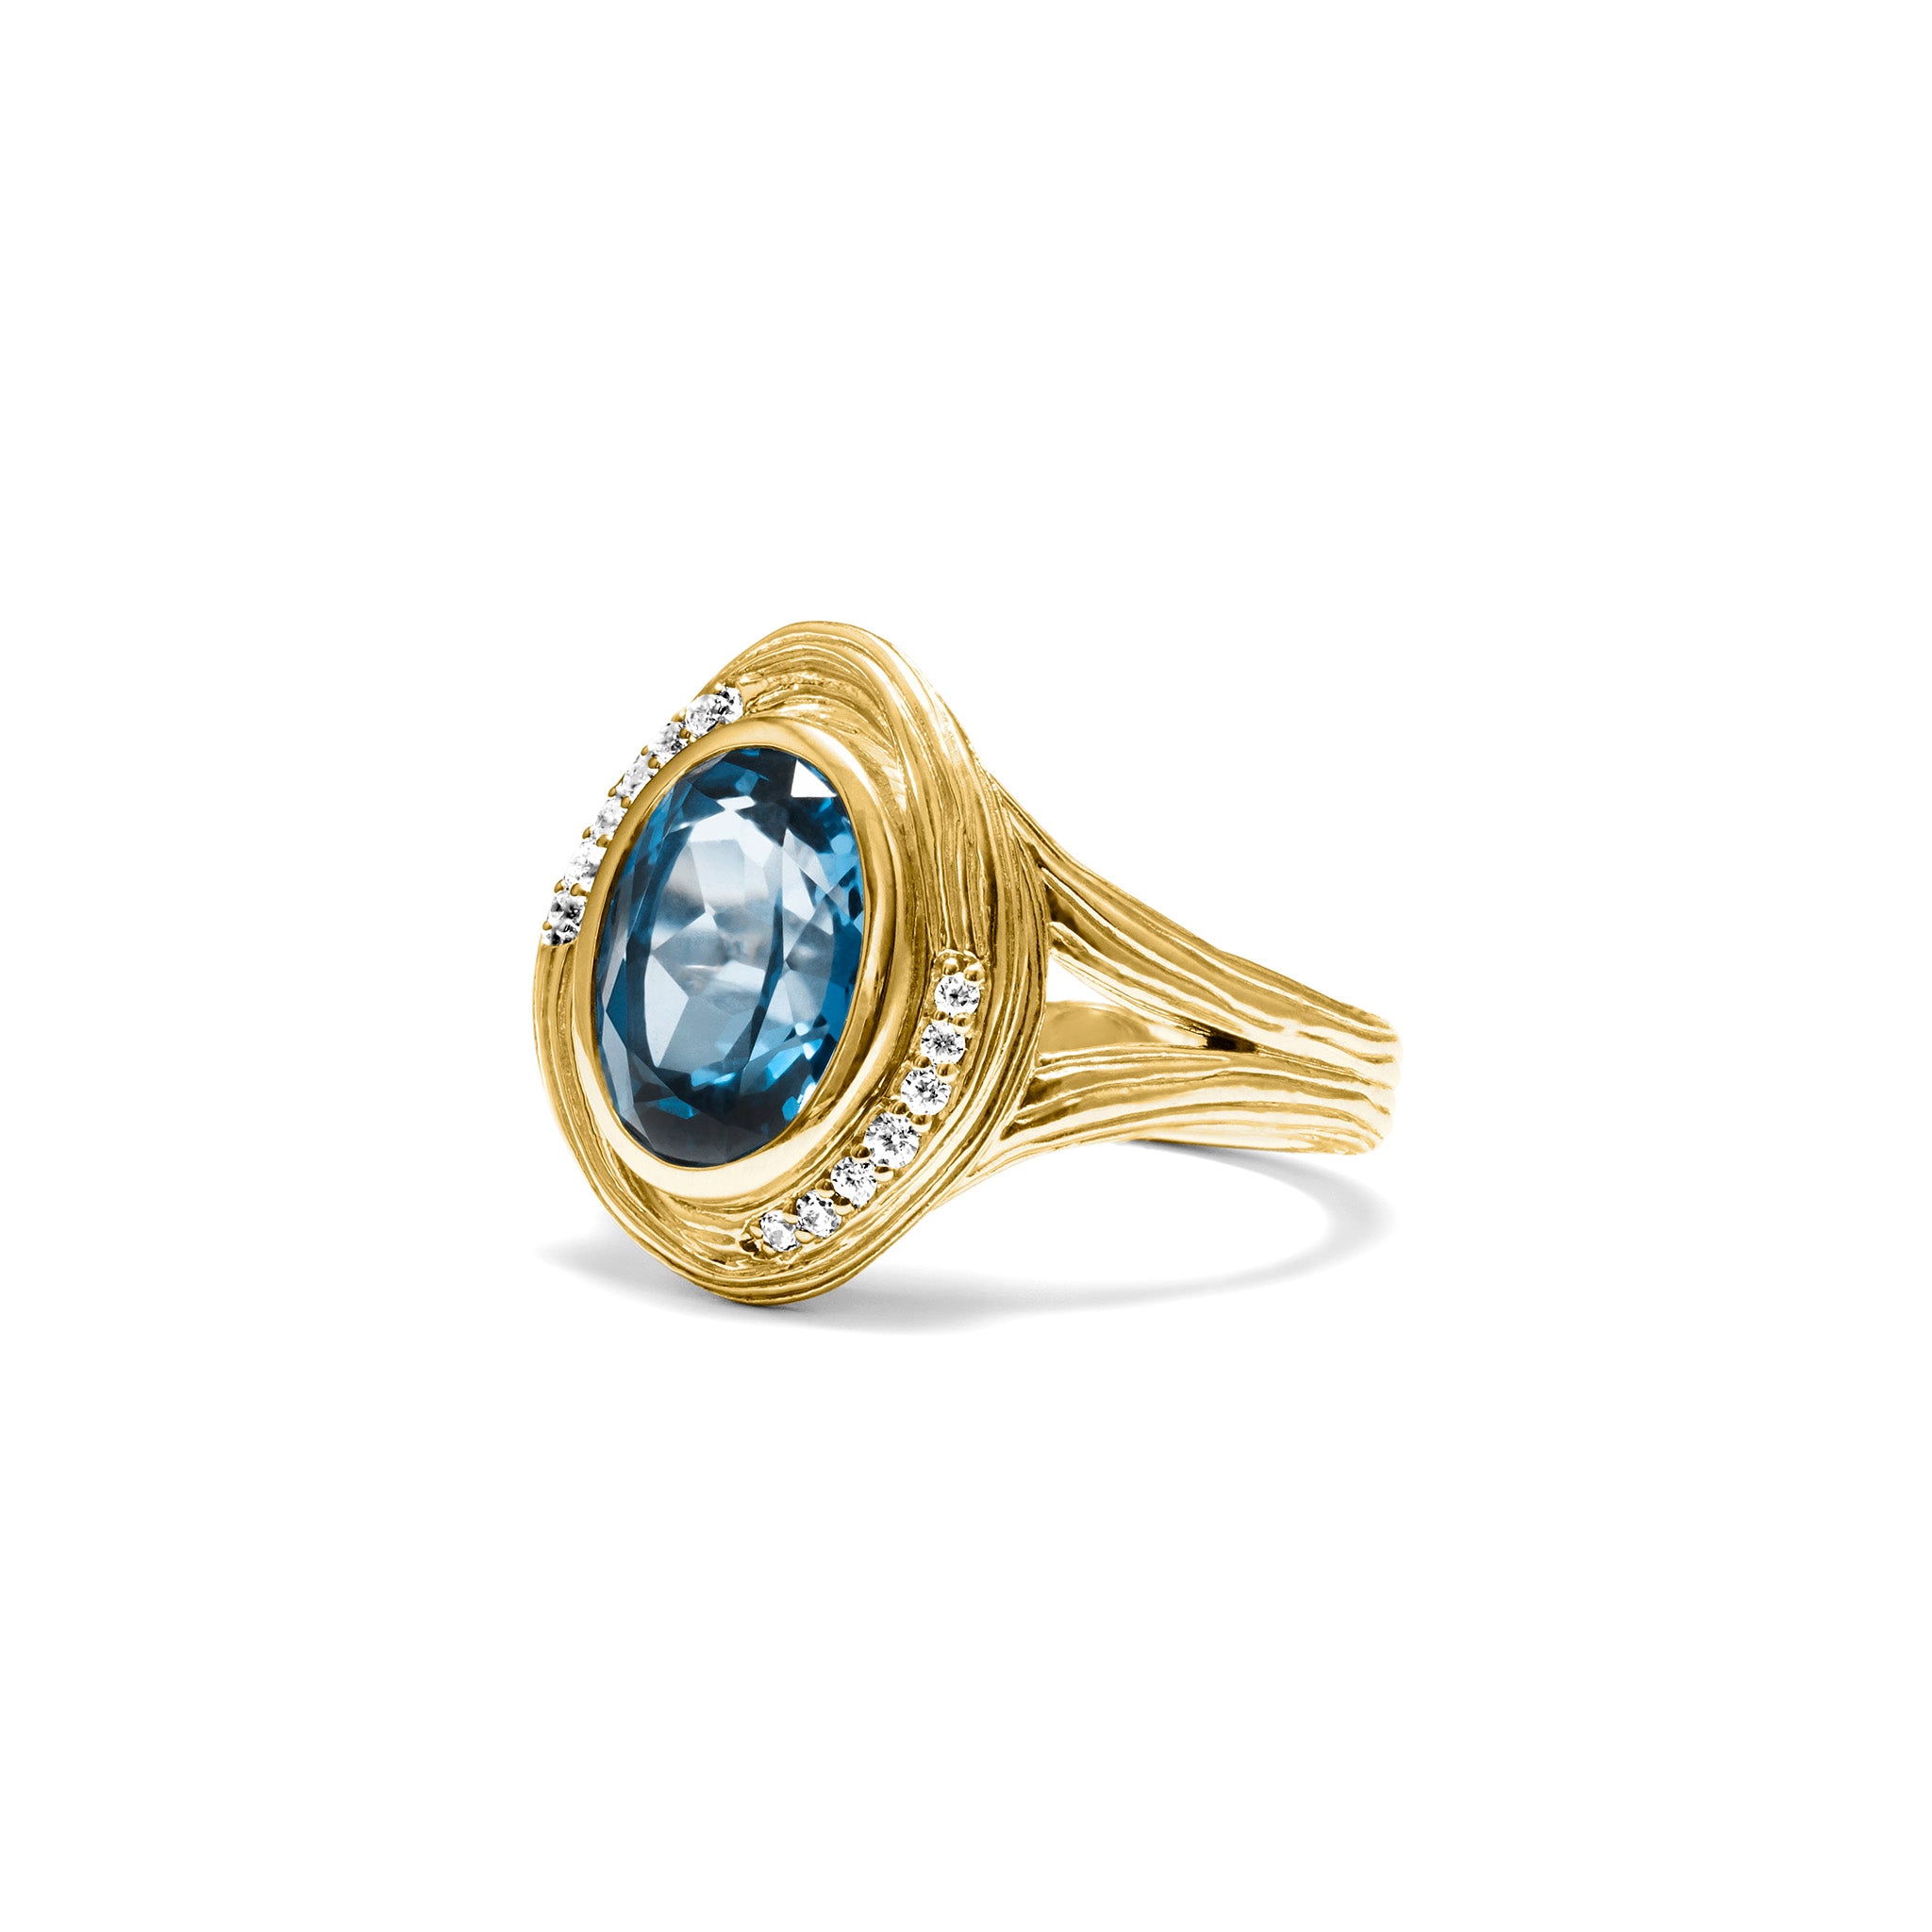 Santorini Oval Ring with London Blue Topaz and Diamonds in 18K